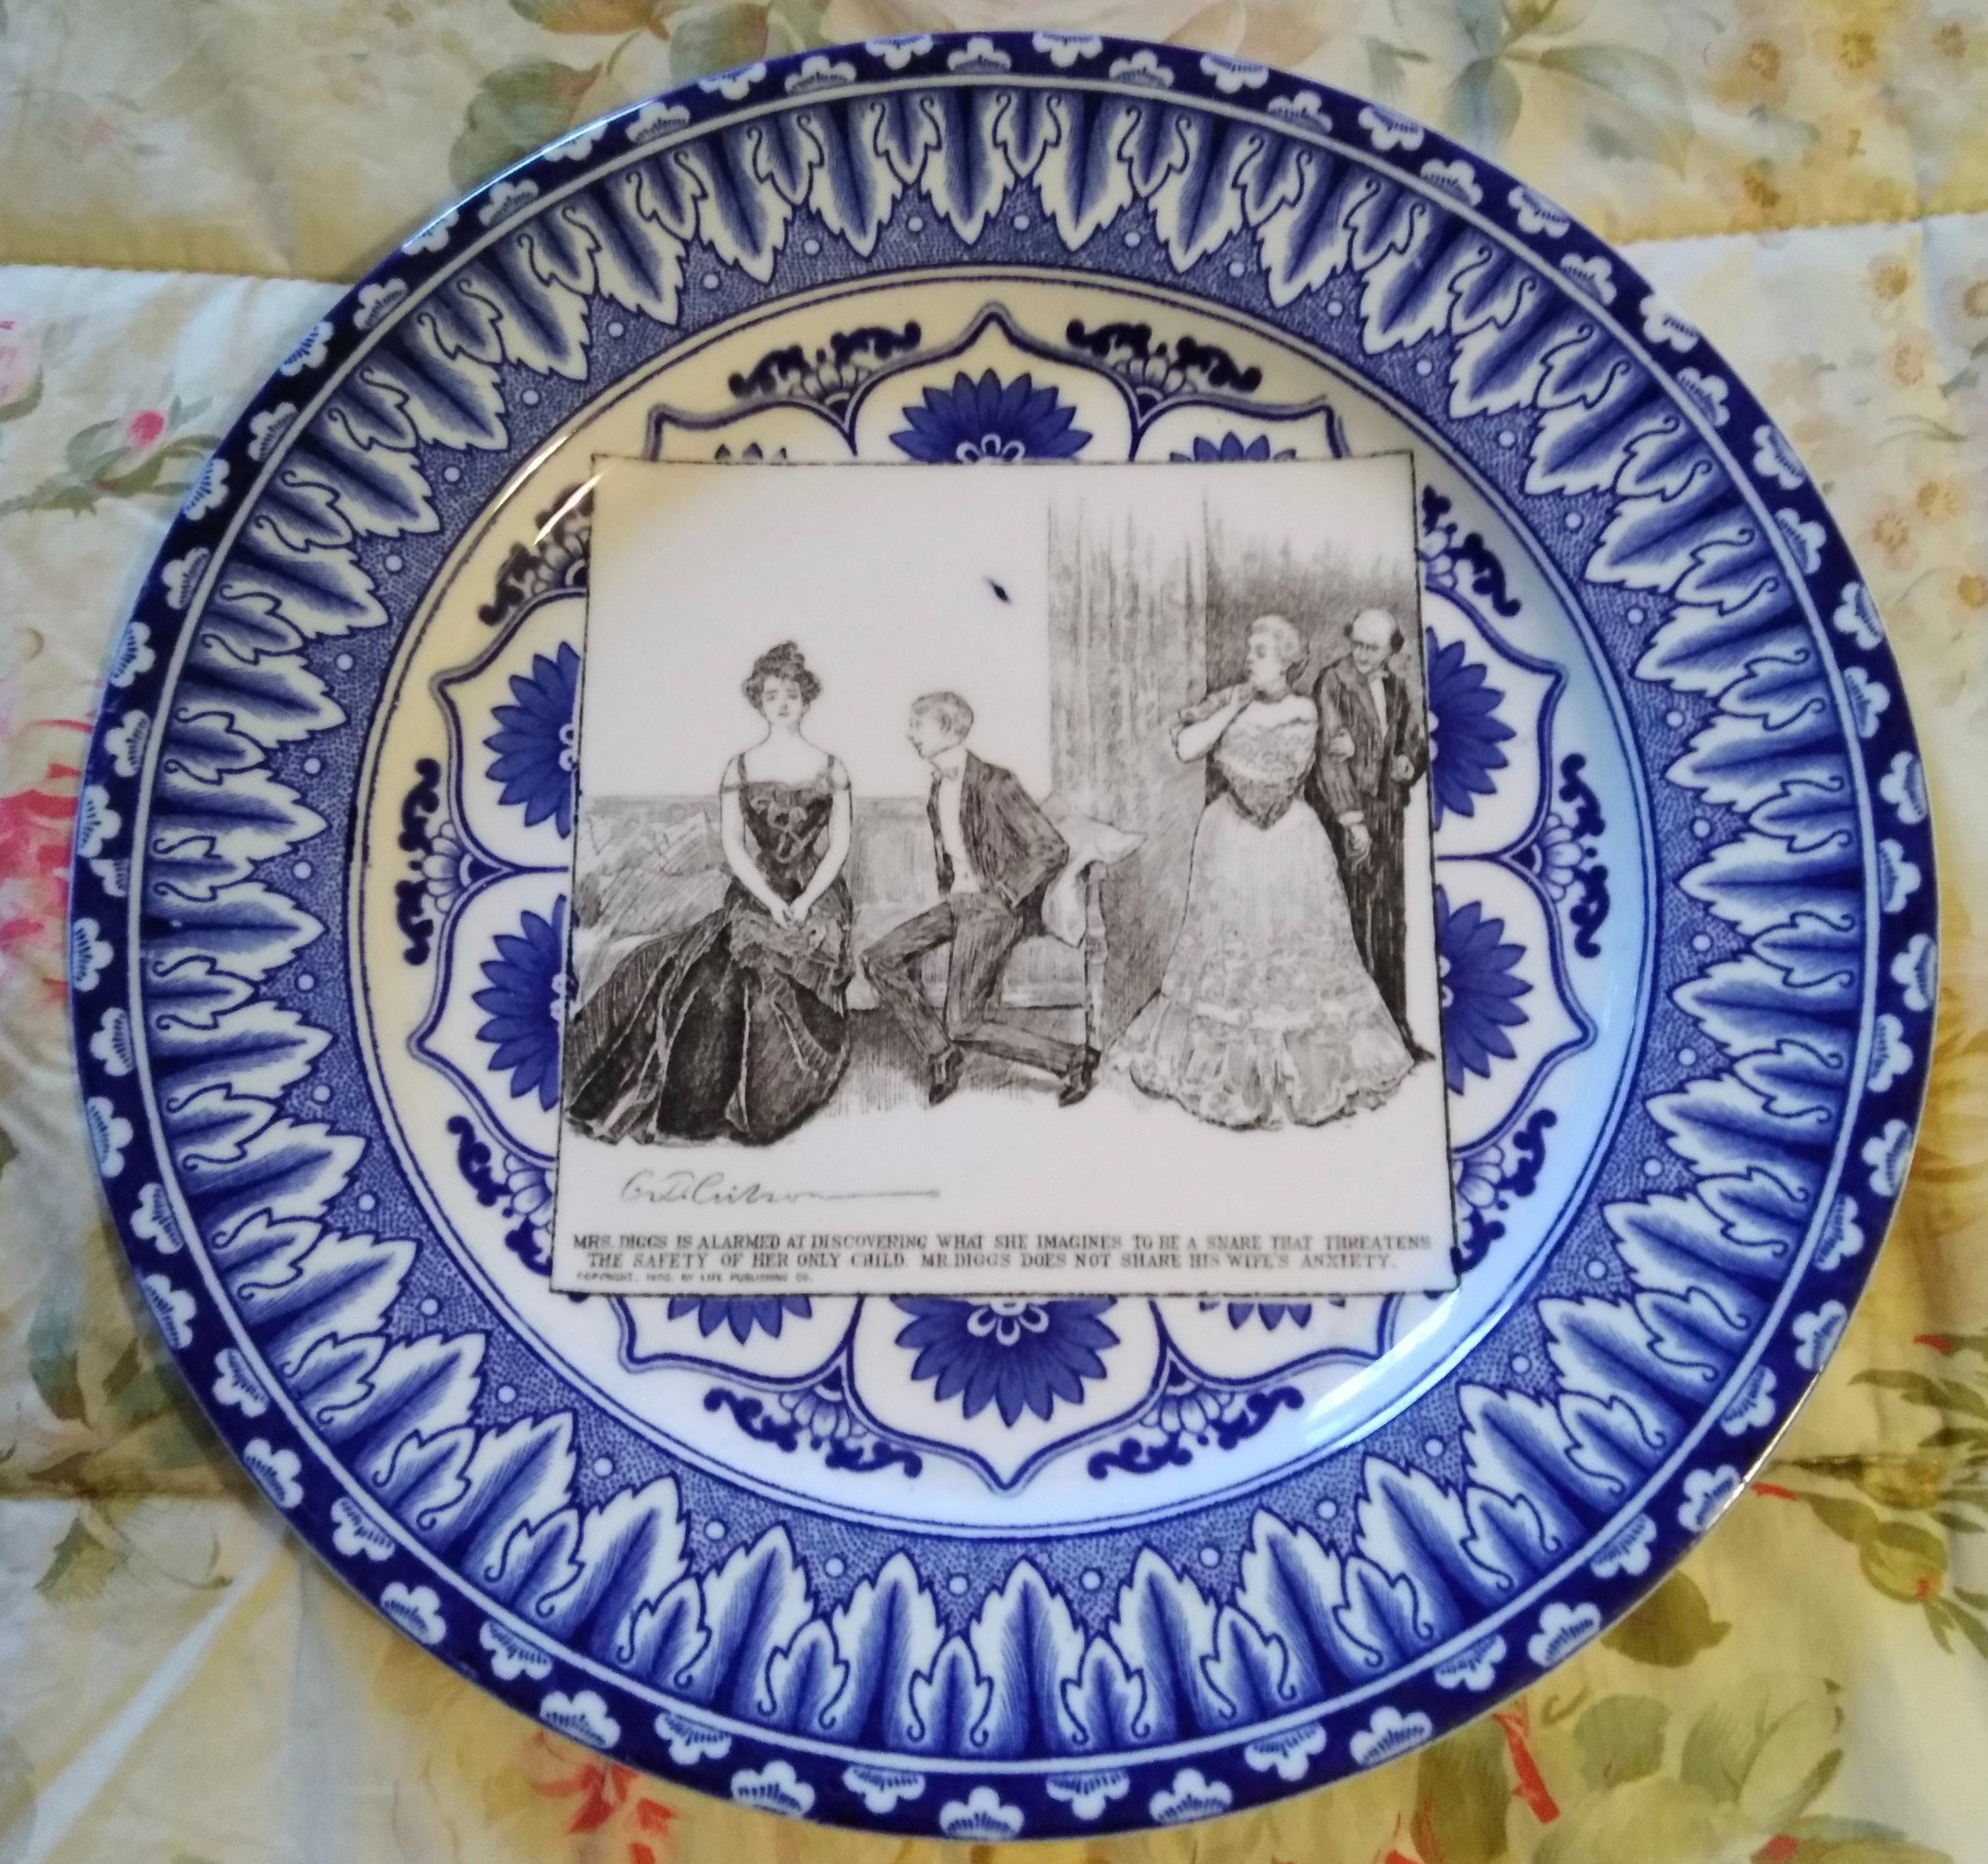 English Royal Doulton Decorative Plates Featuring Charles Dana Gibson Illustrations